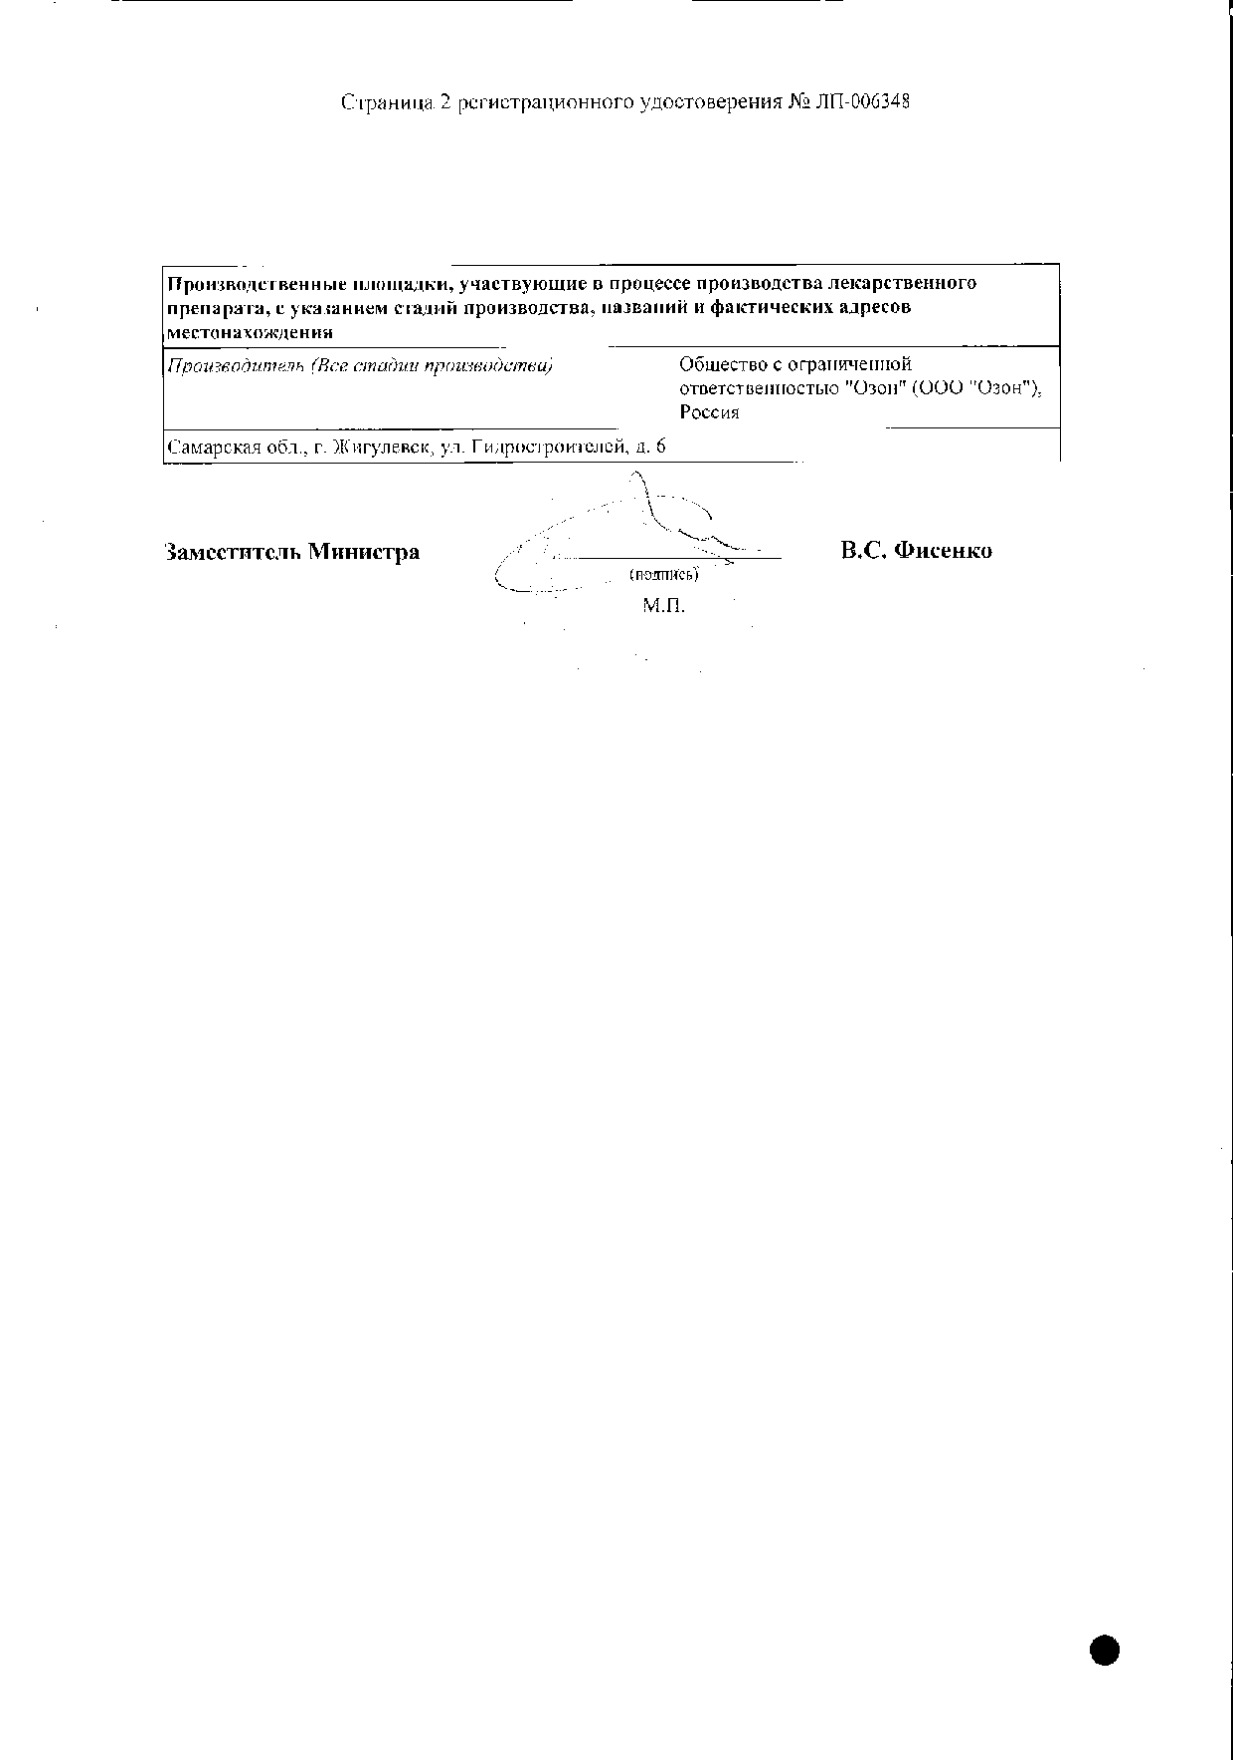 Кларитромицин СР таблетки с пролонг. высвожд. п/о плен. 0,5г 14шт: сертификат